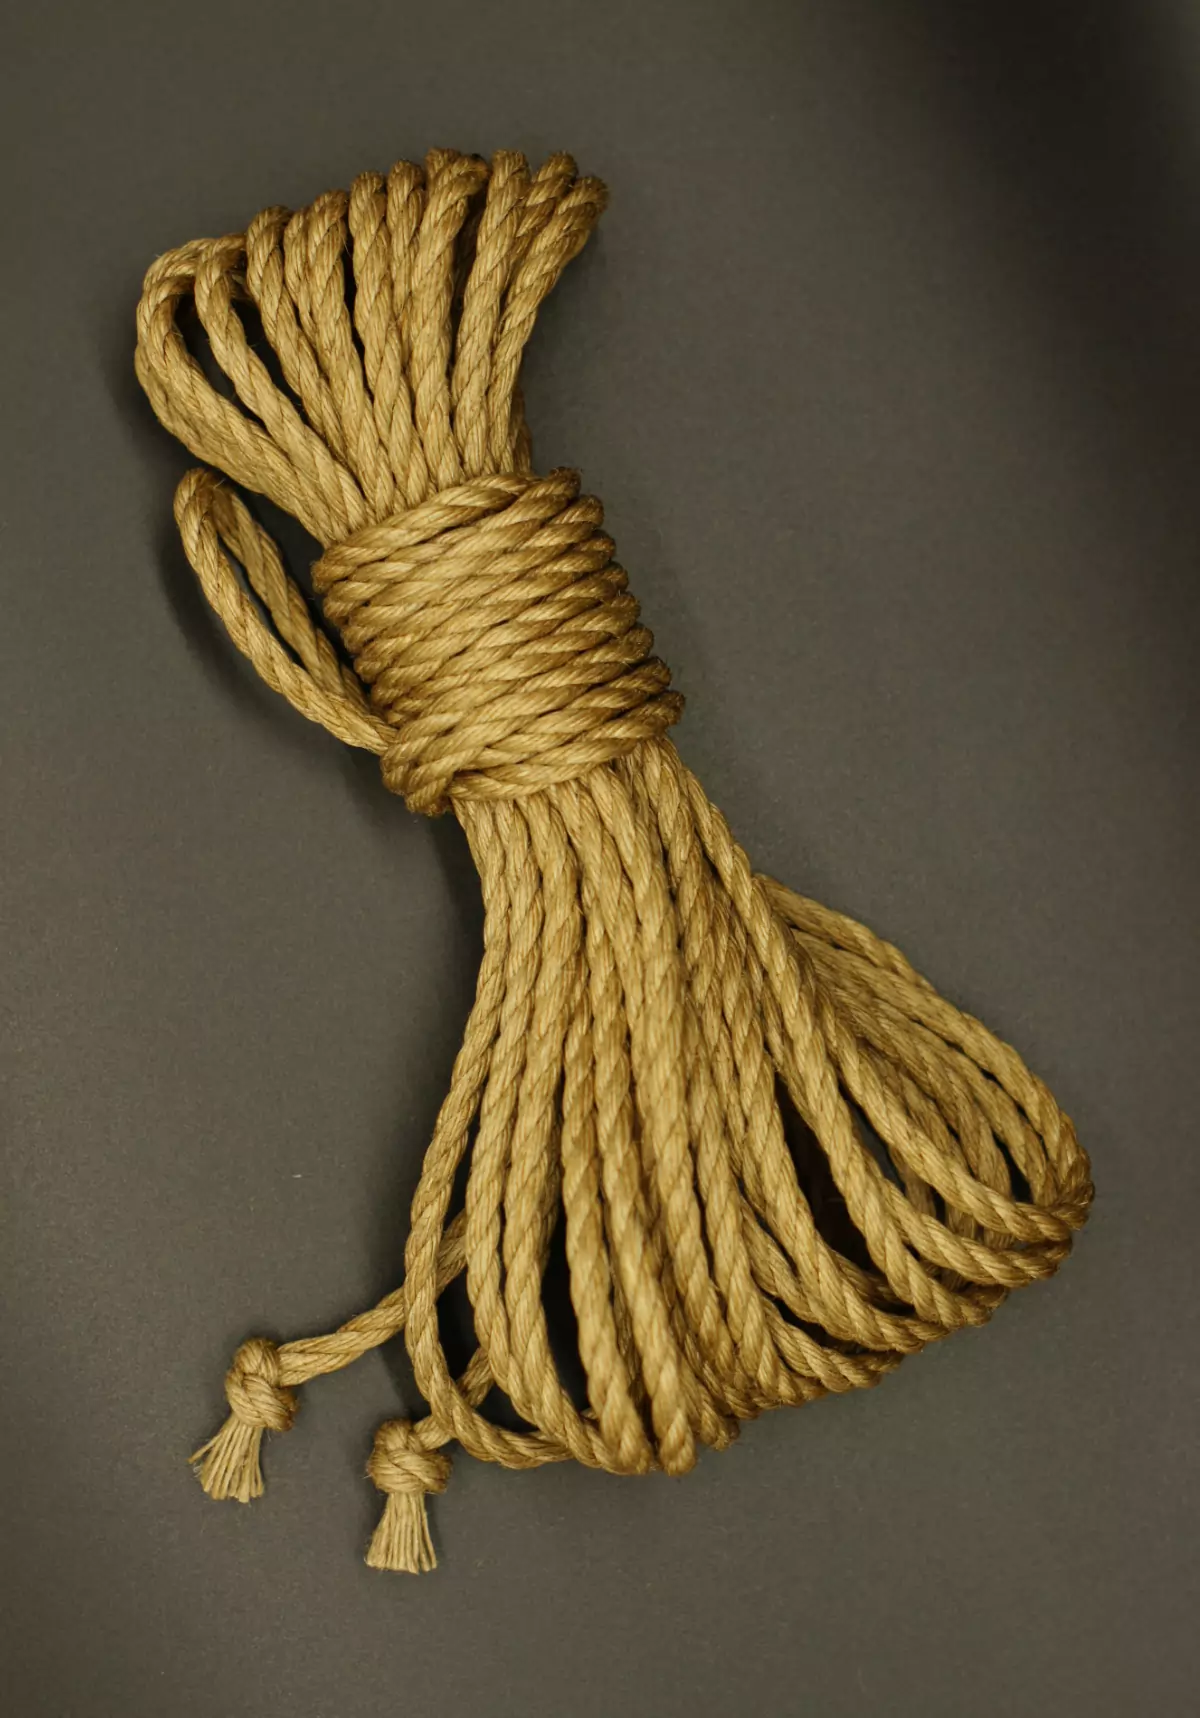  ∅ 6mm jute rope, ready-to-use, various lengths, vegan